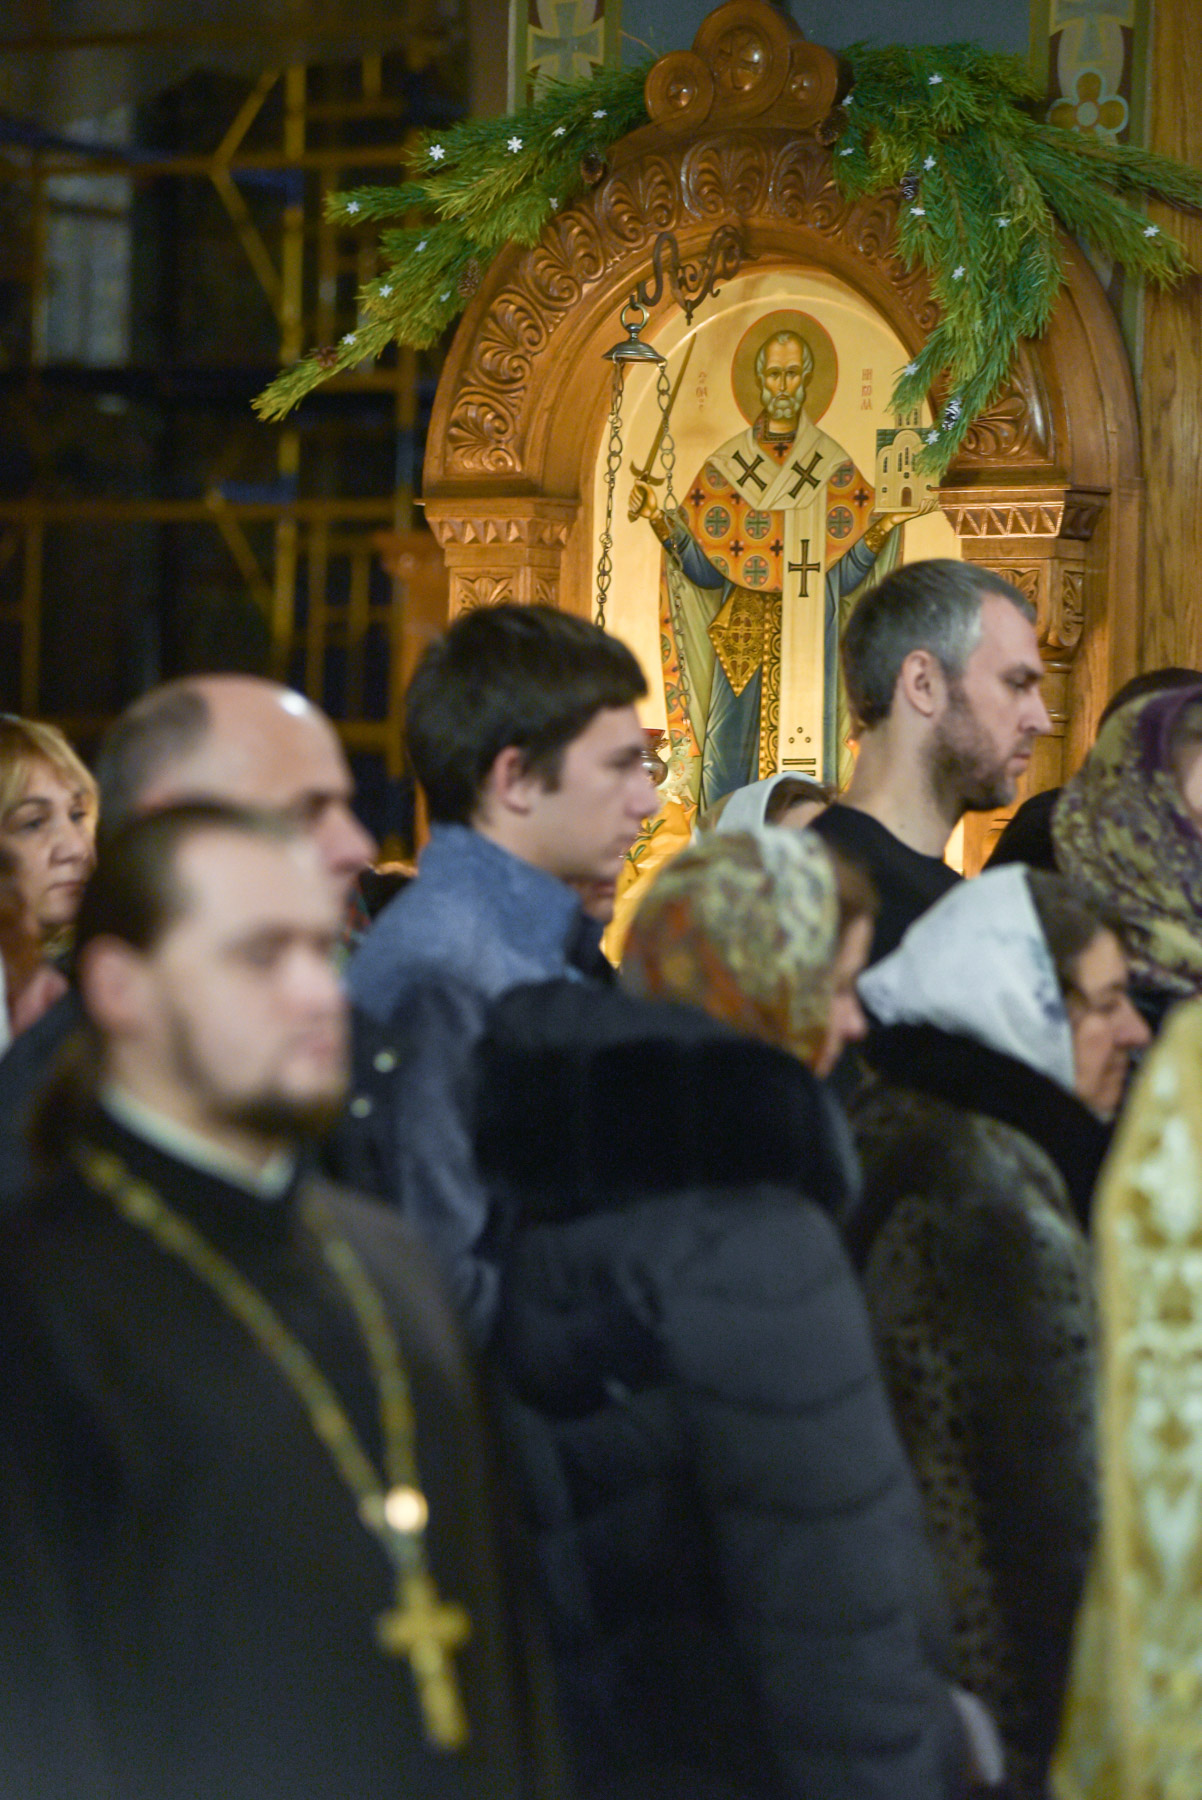 photos of orthodox christmas 0101